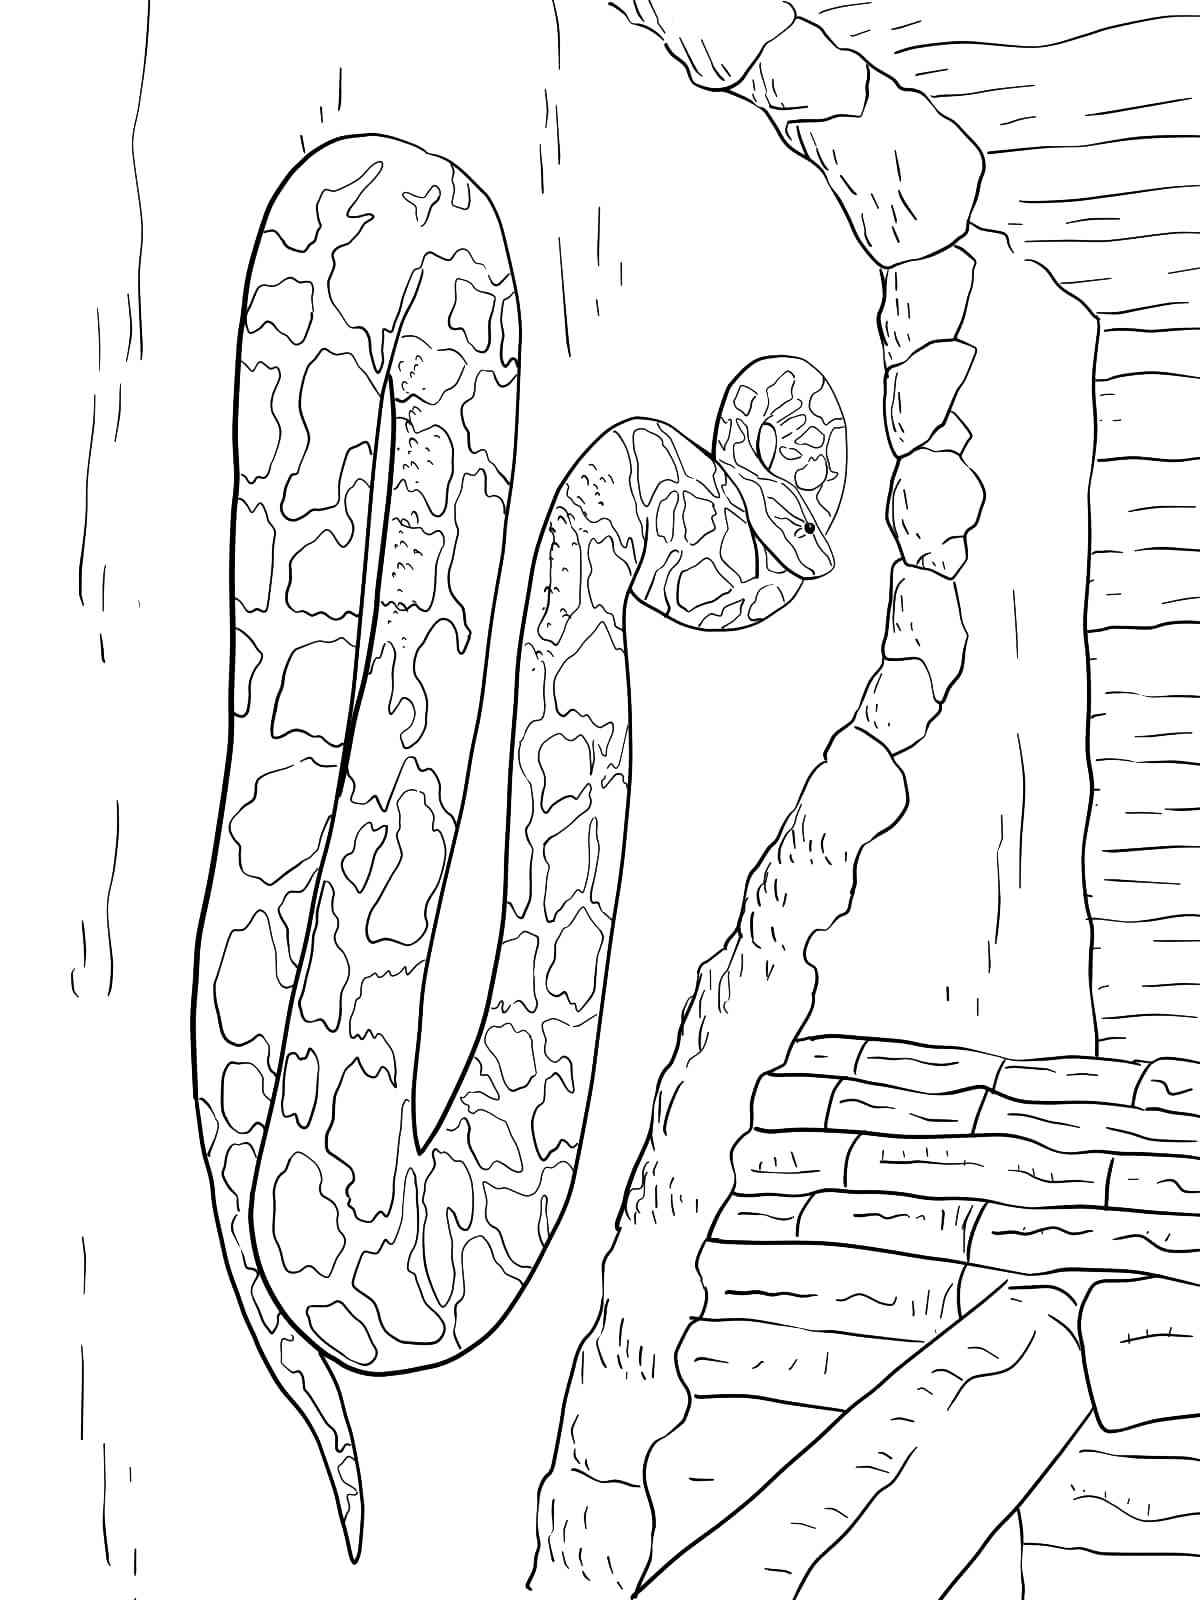 Anaconda in a zoo coloring page